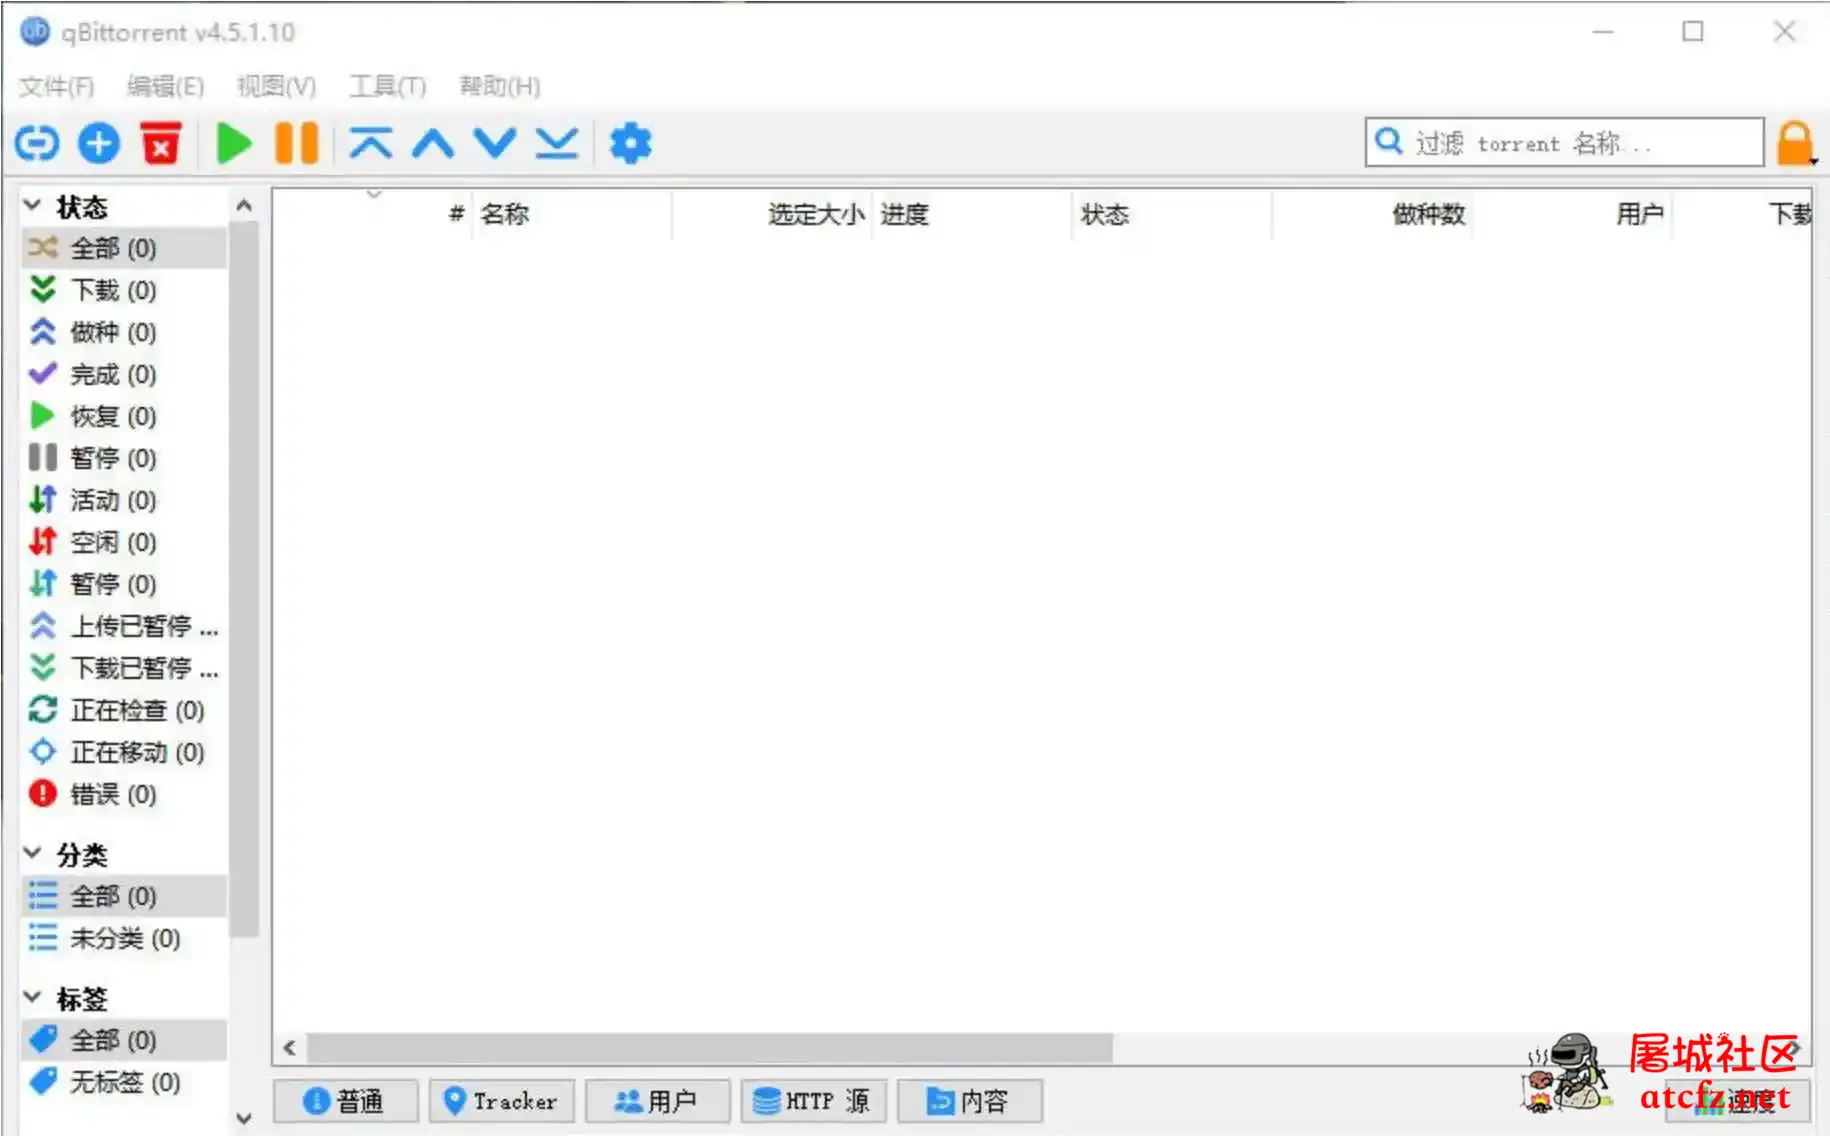 qBittorrent v4.5.3.10增强便携版BT种子下载工具 屠城辅助网www.tcfz1.com653